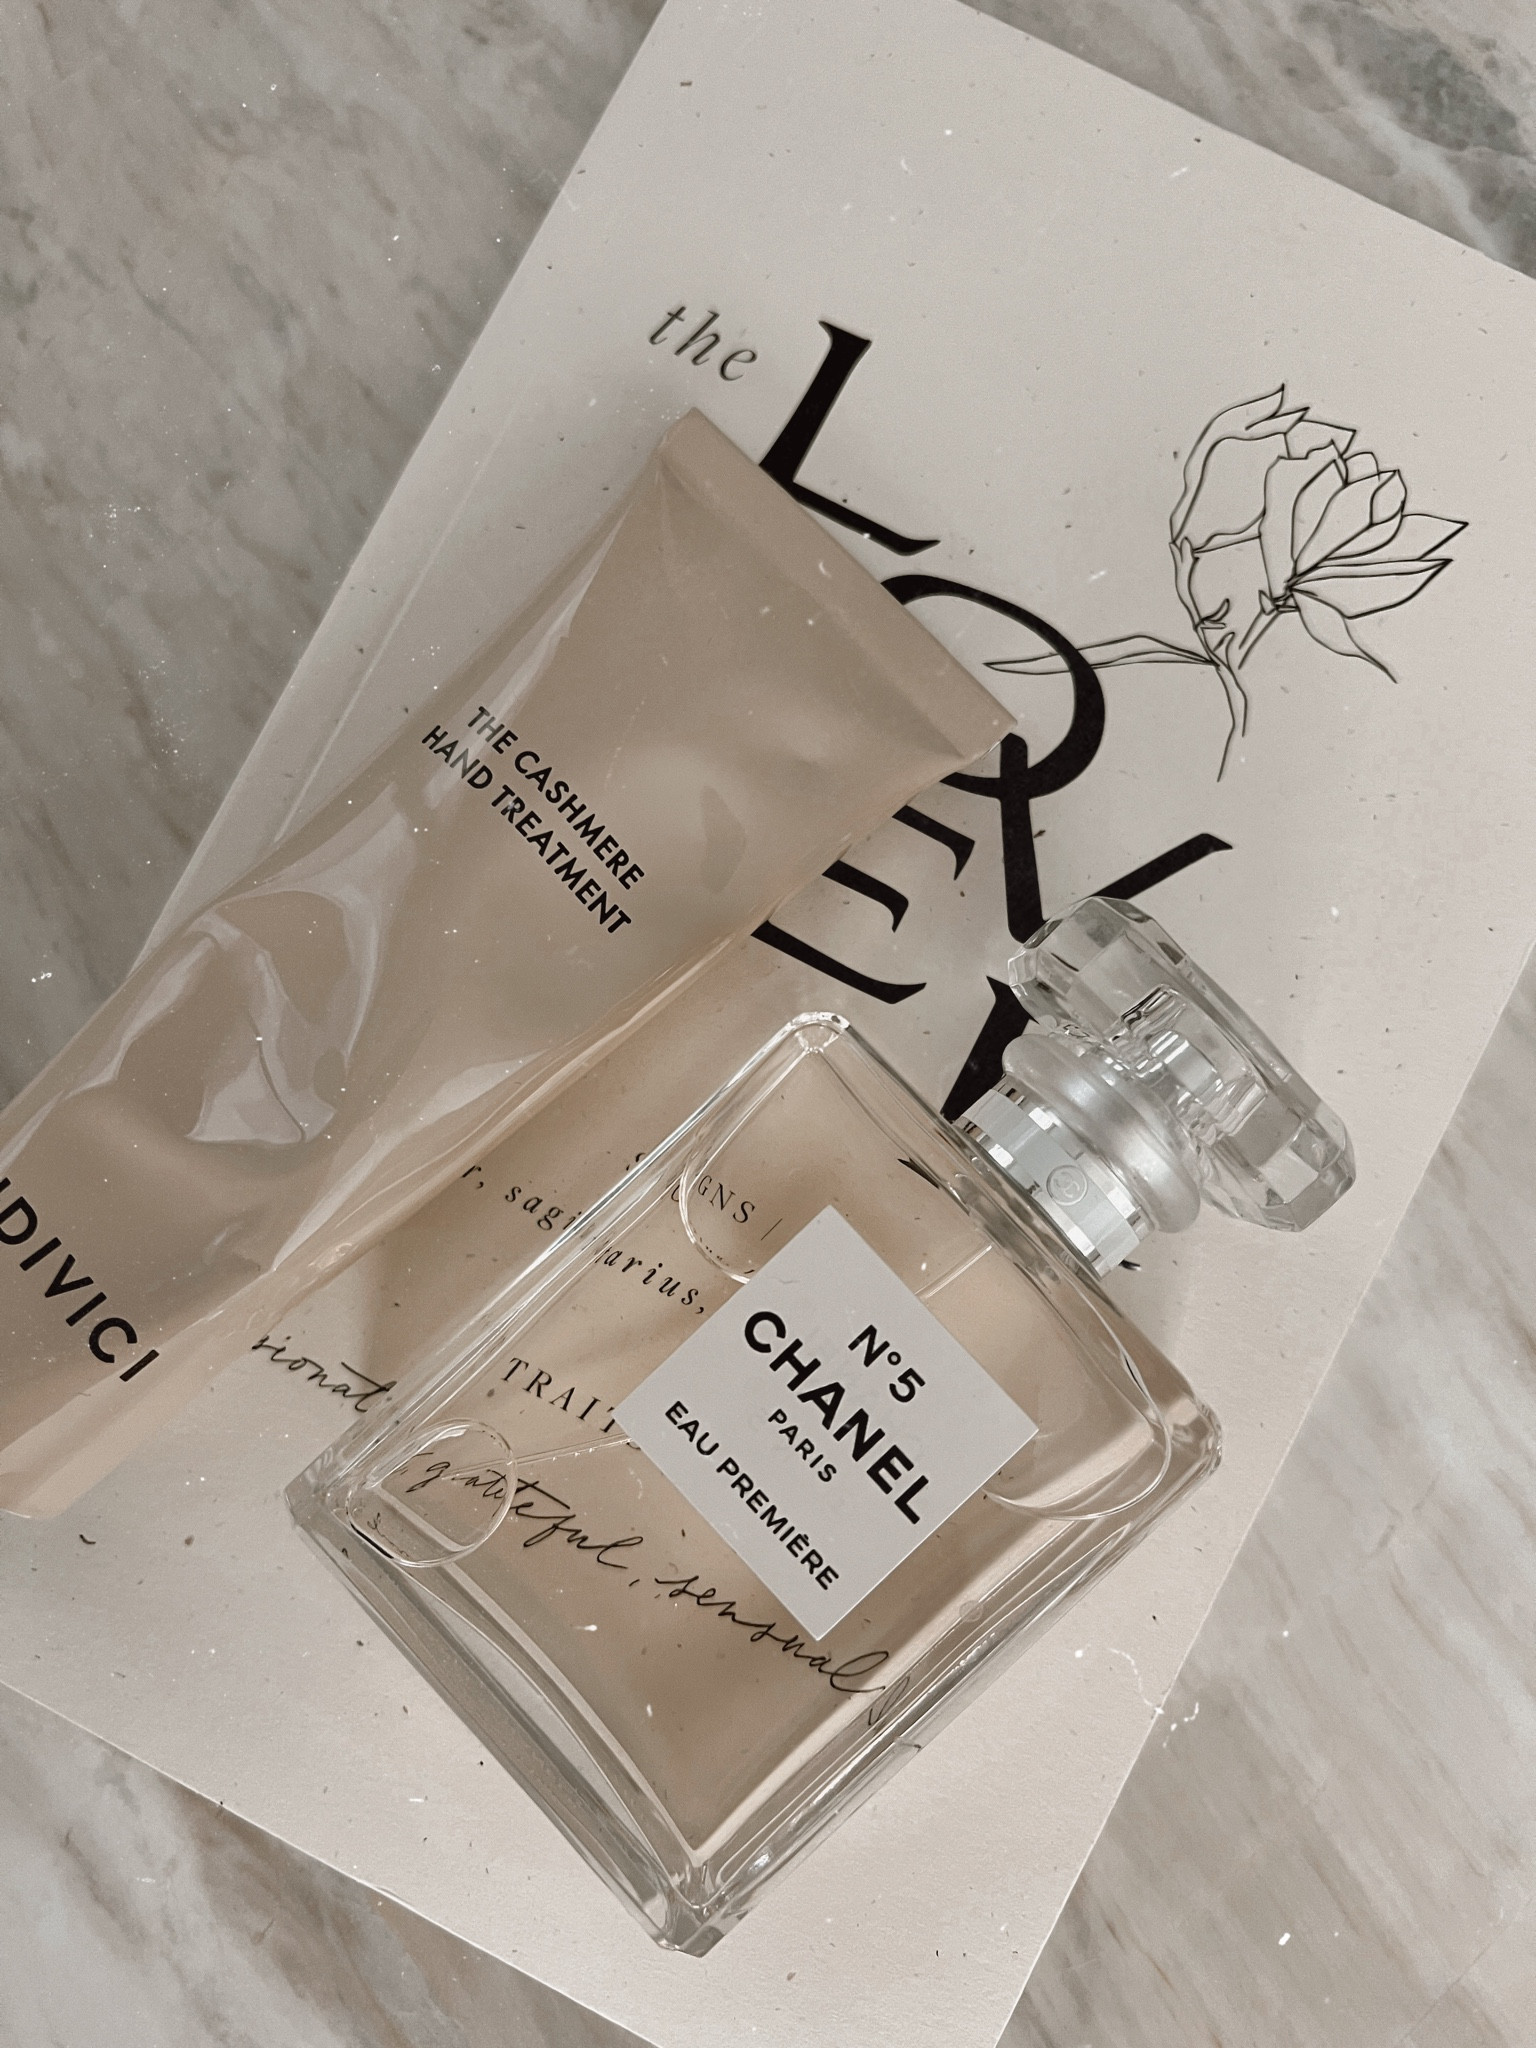 Chanel No.5 Eau Premiere Spray Perfume at 20% Off